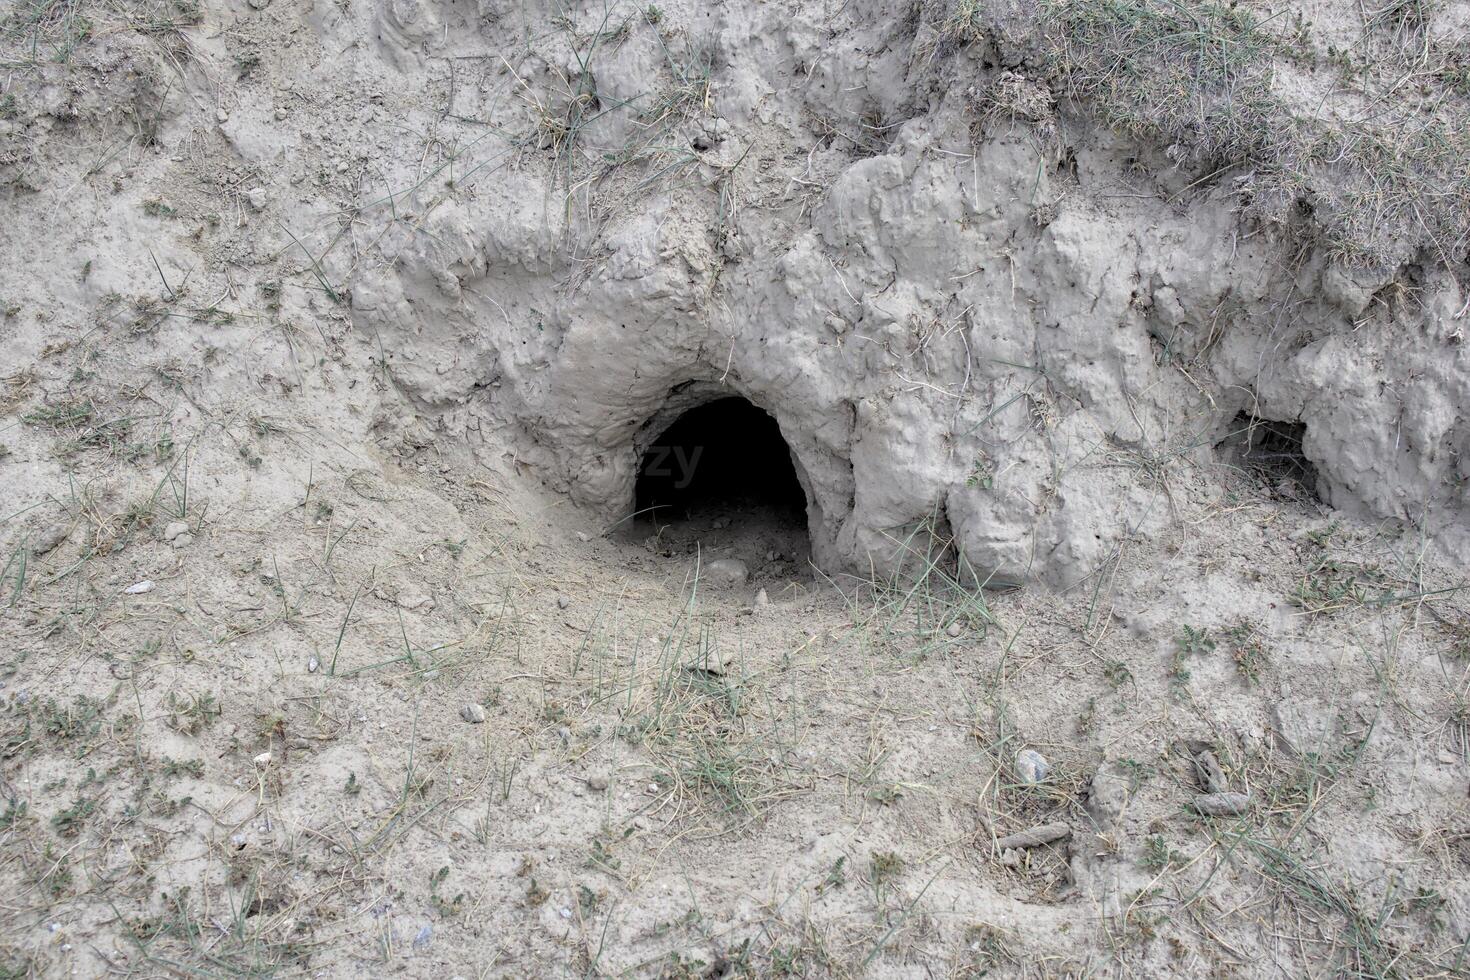 Marmot burrow in Khaplu, Baltistan. photo